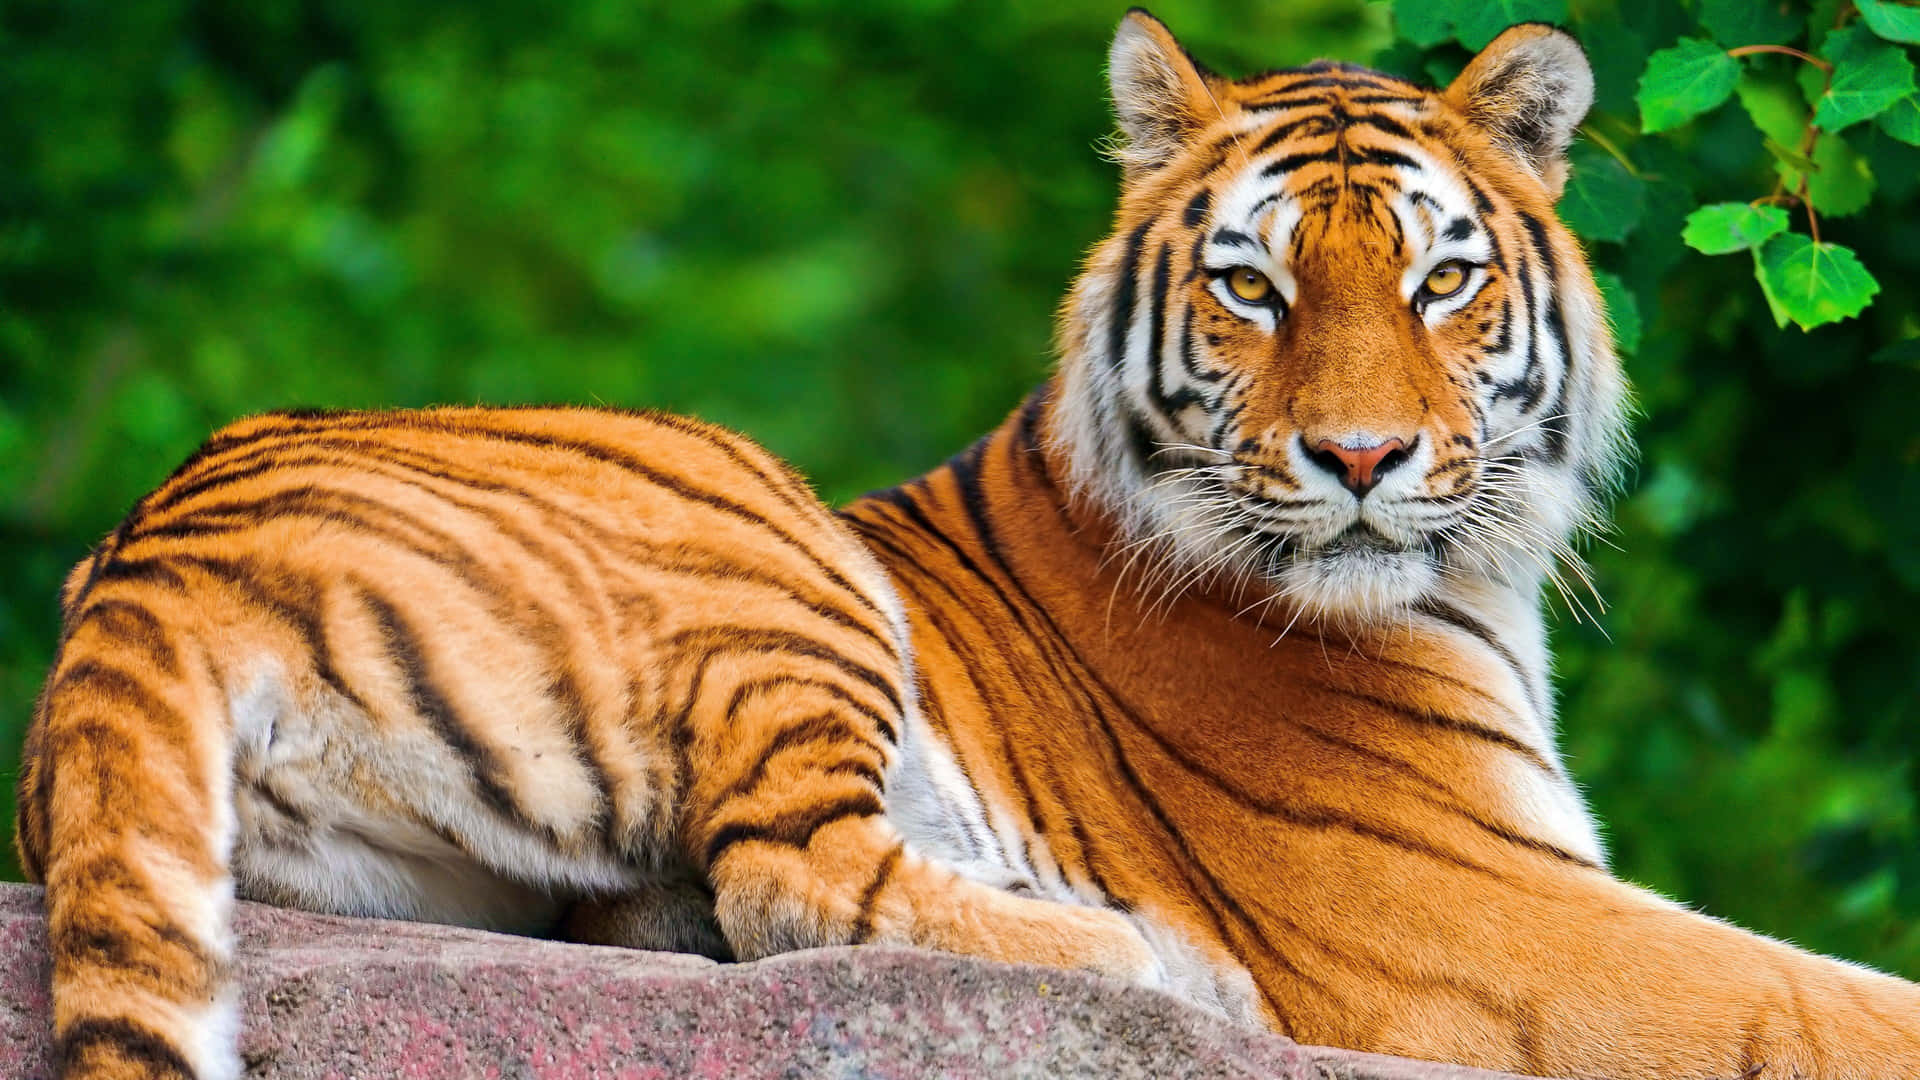 Majestic Tiger in Its Natural Habitat